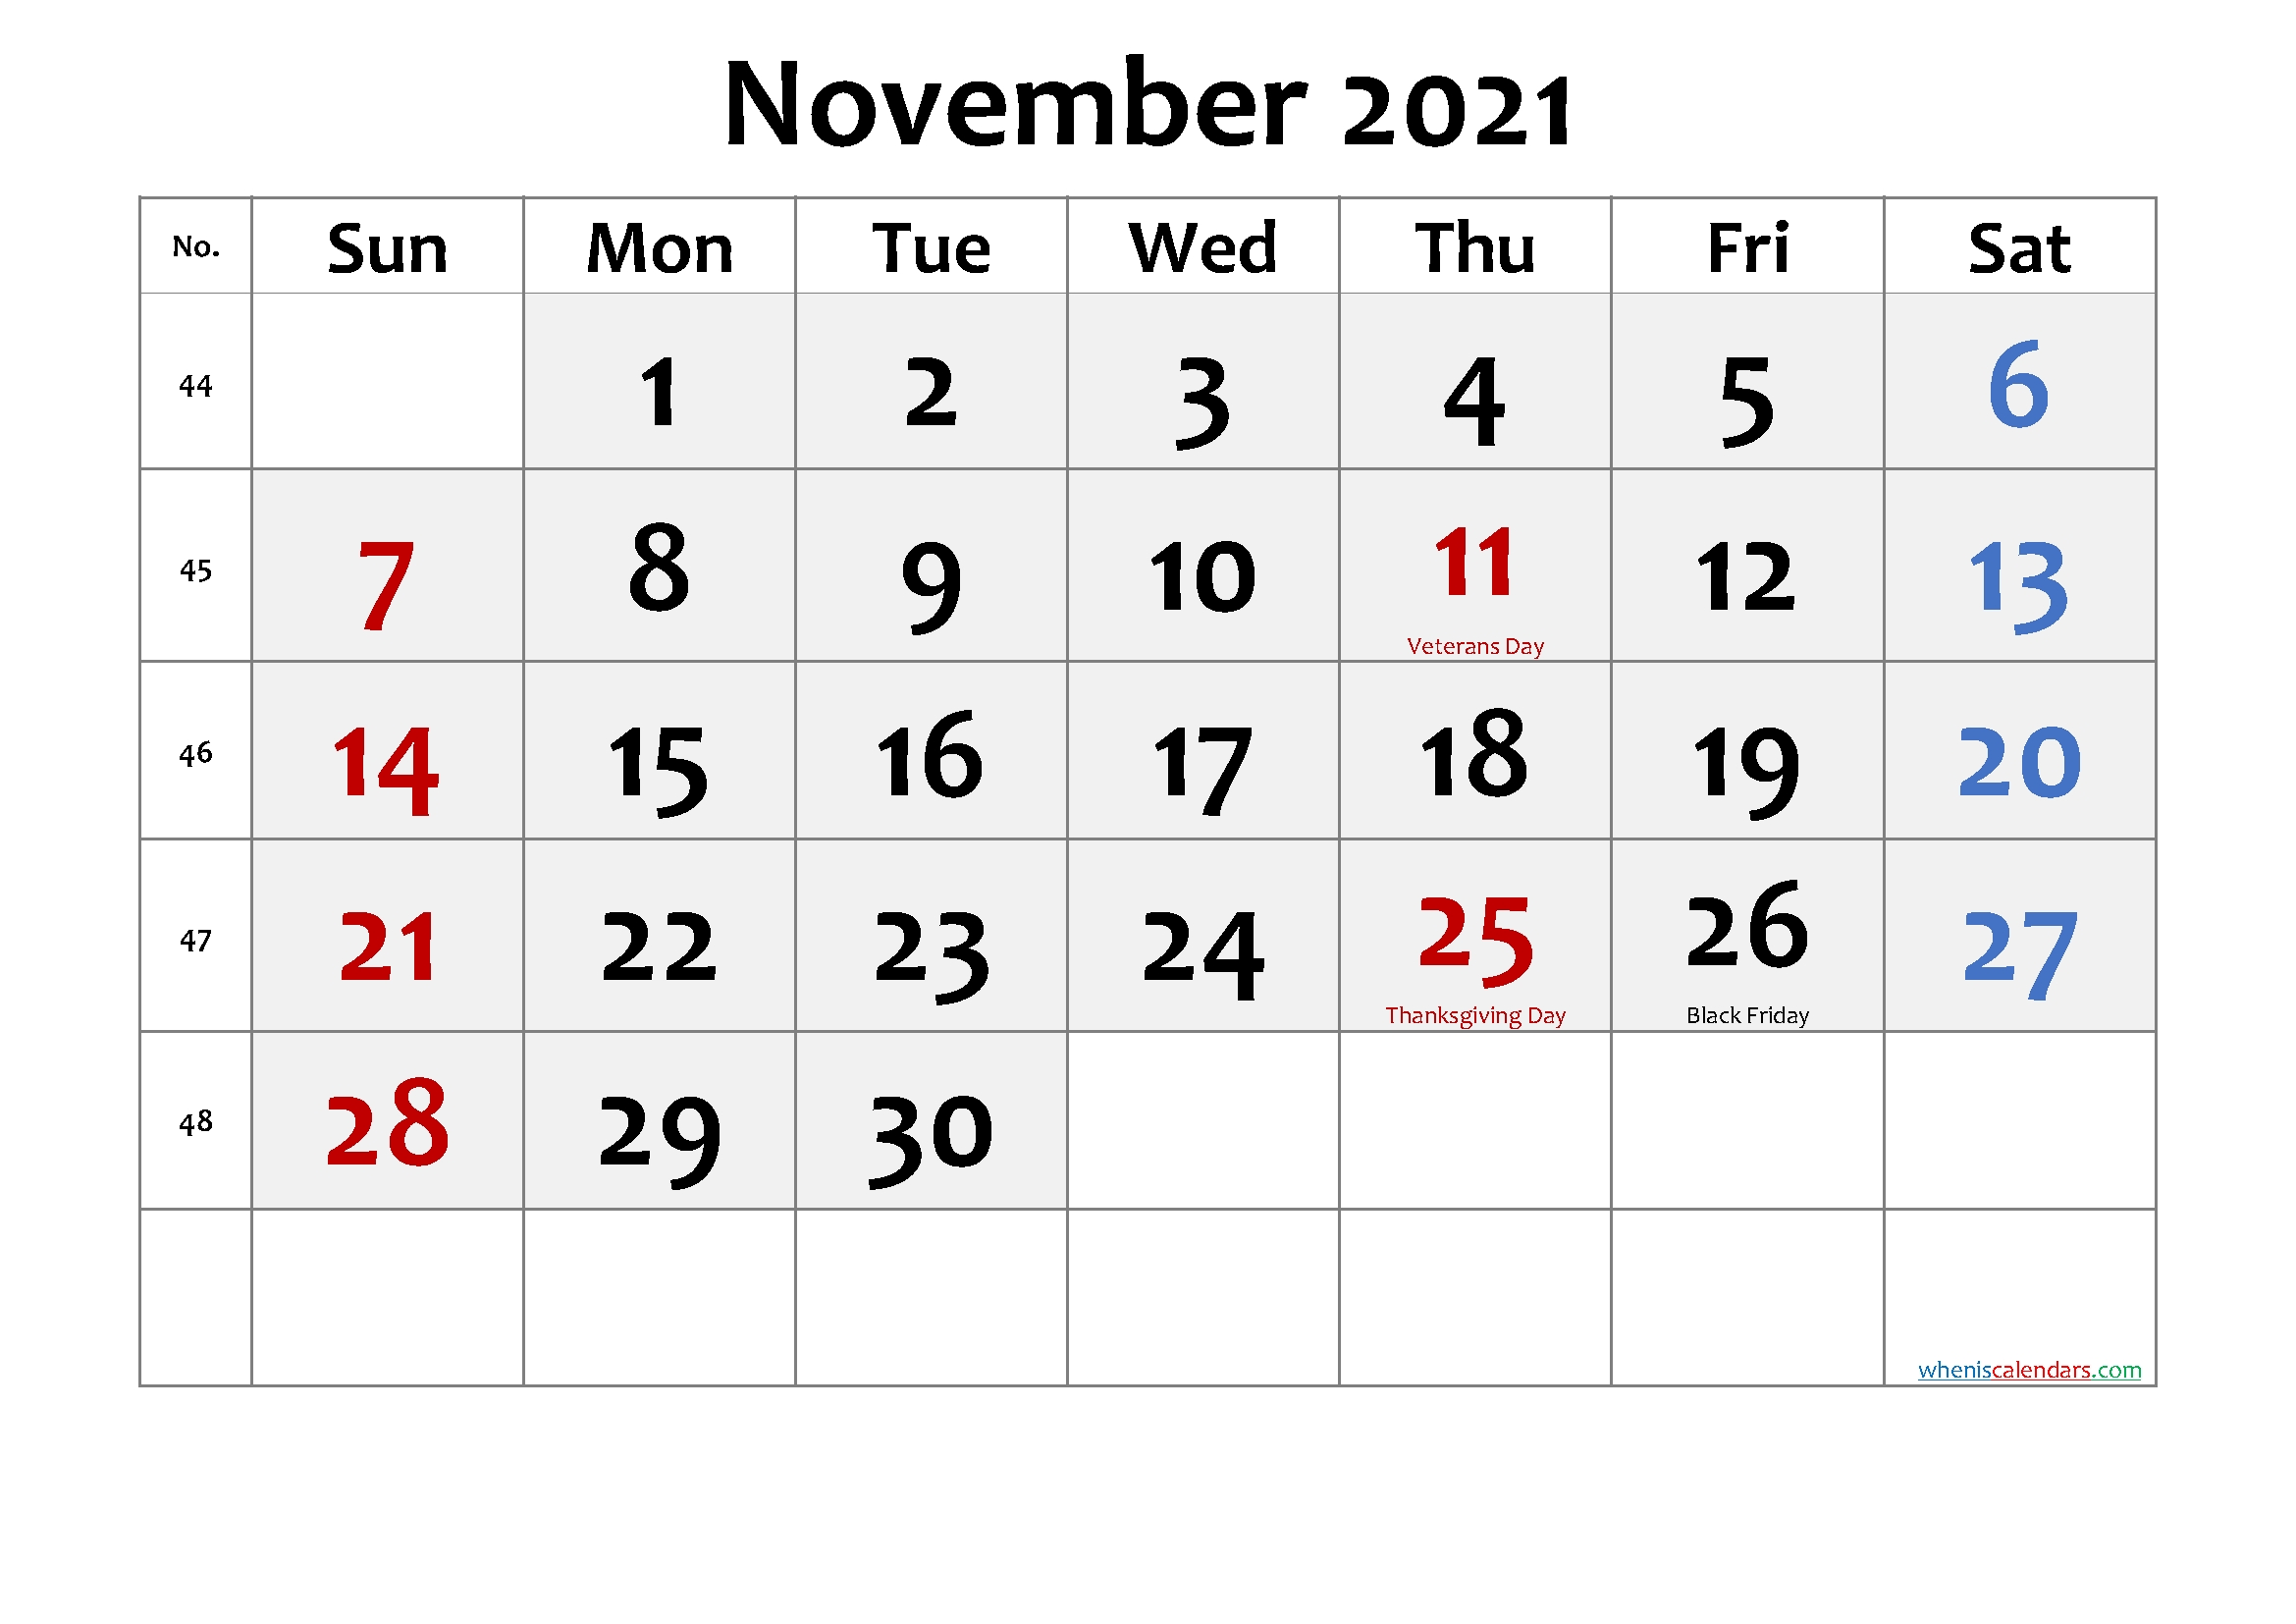 Free Printable November 2021 Calendar With Holidays Calendar For November 2021 With Holidays